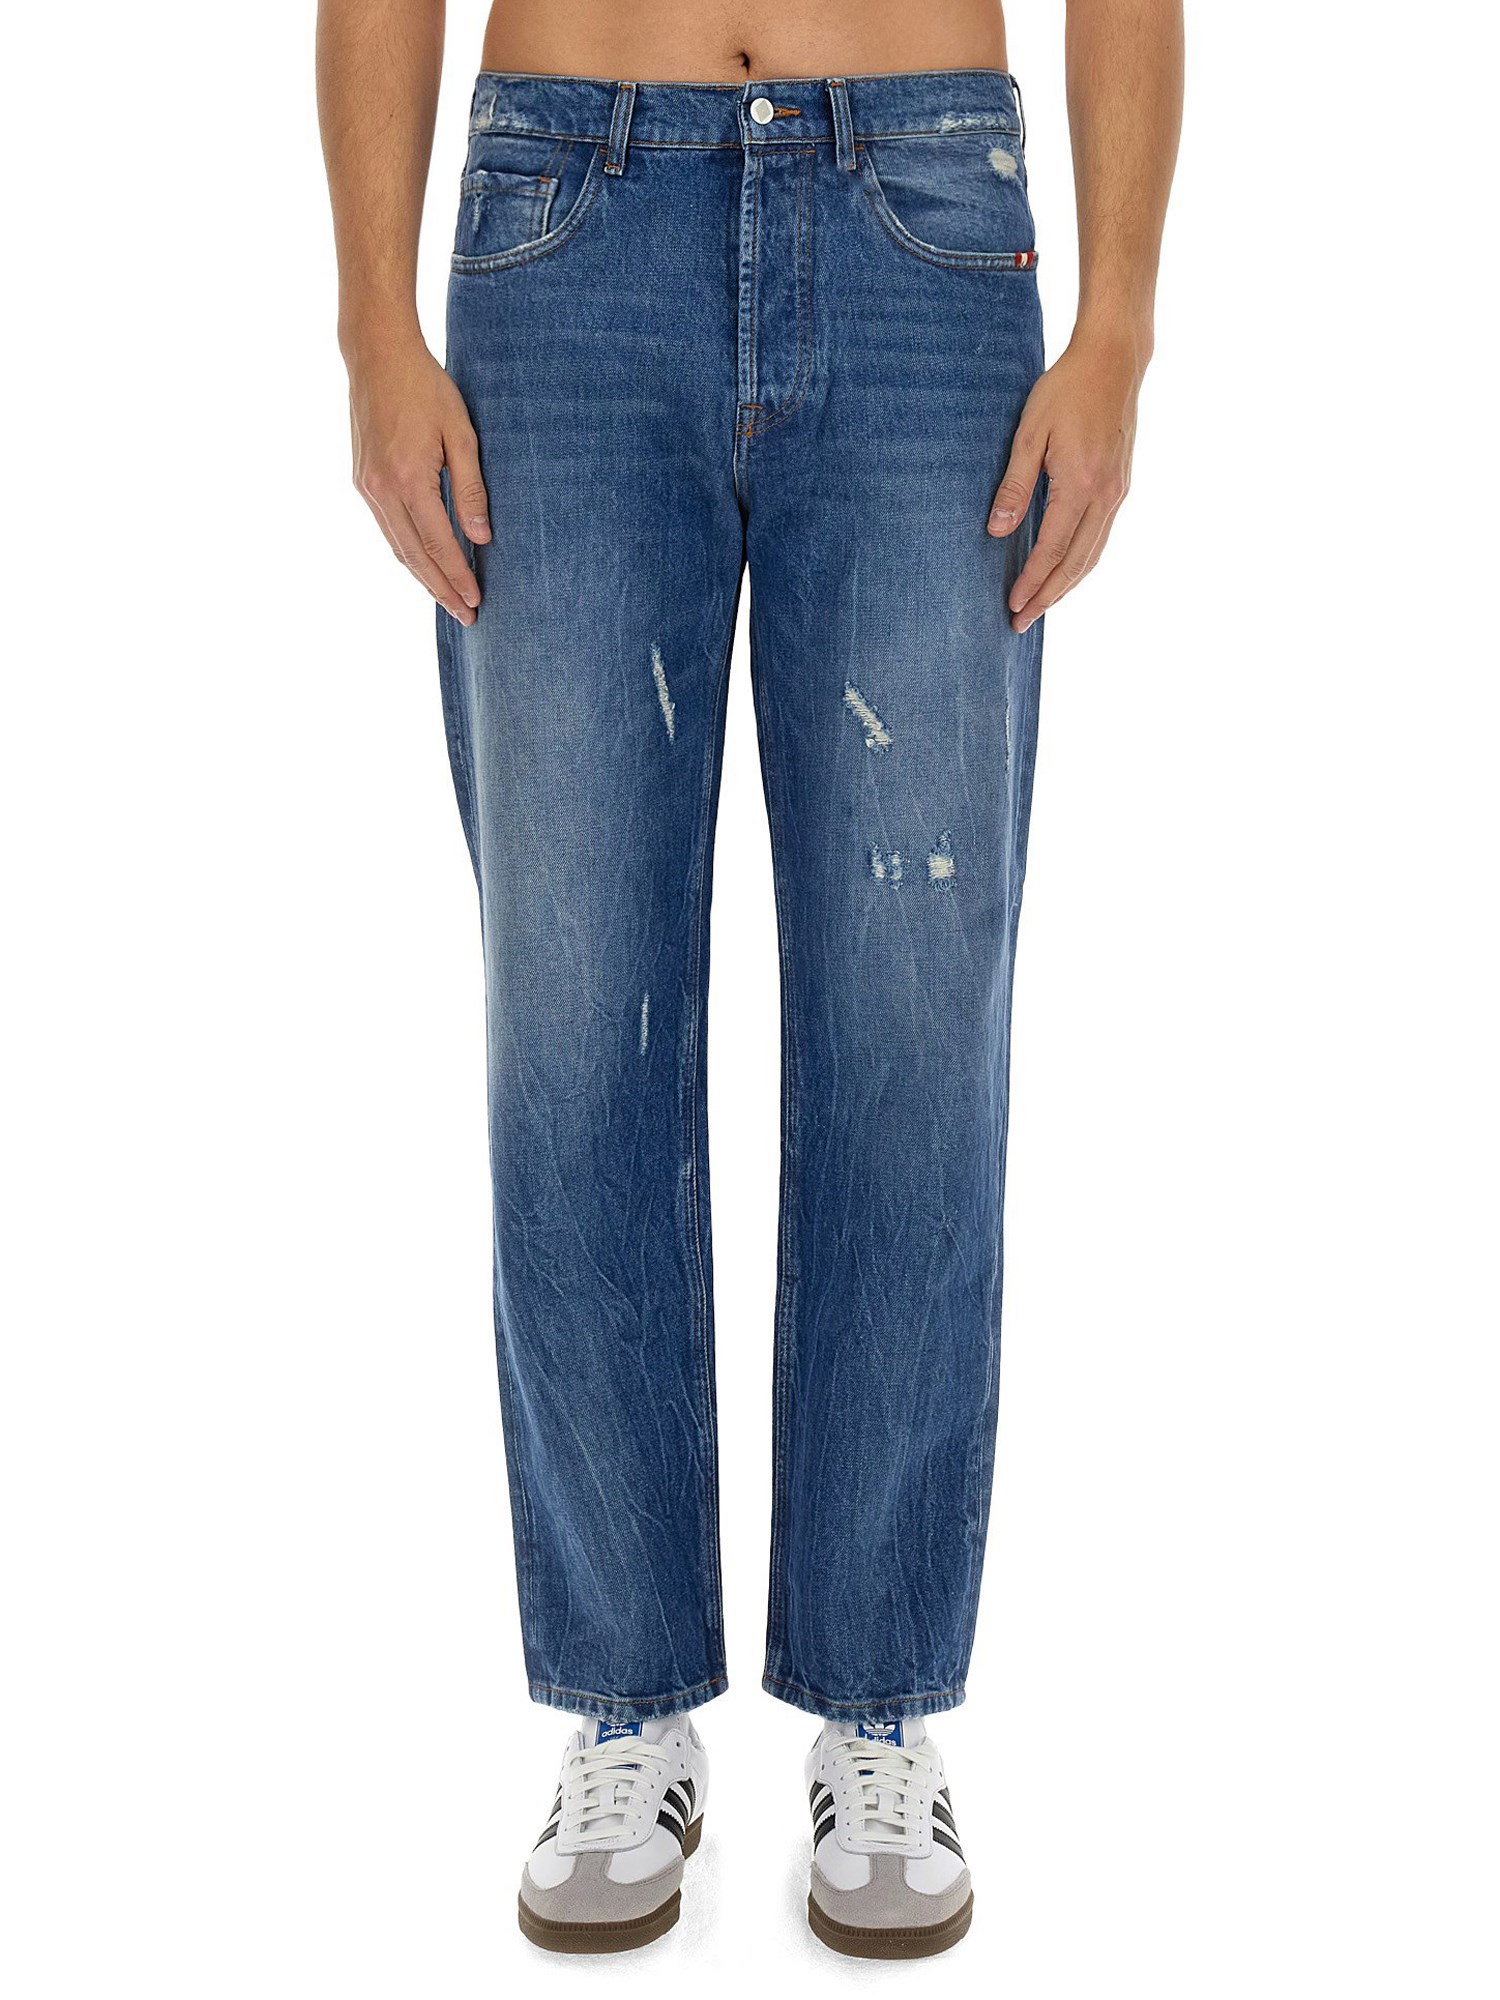 Amish amish "jeremiah straight" jeans